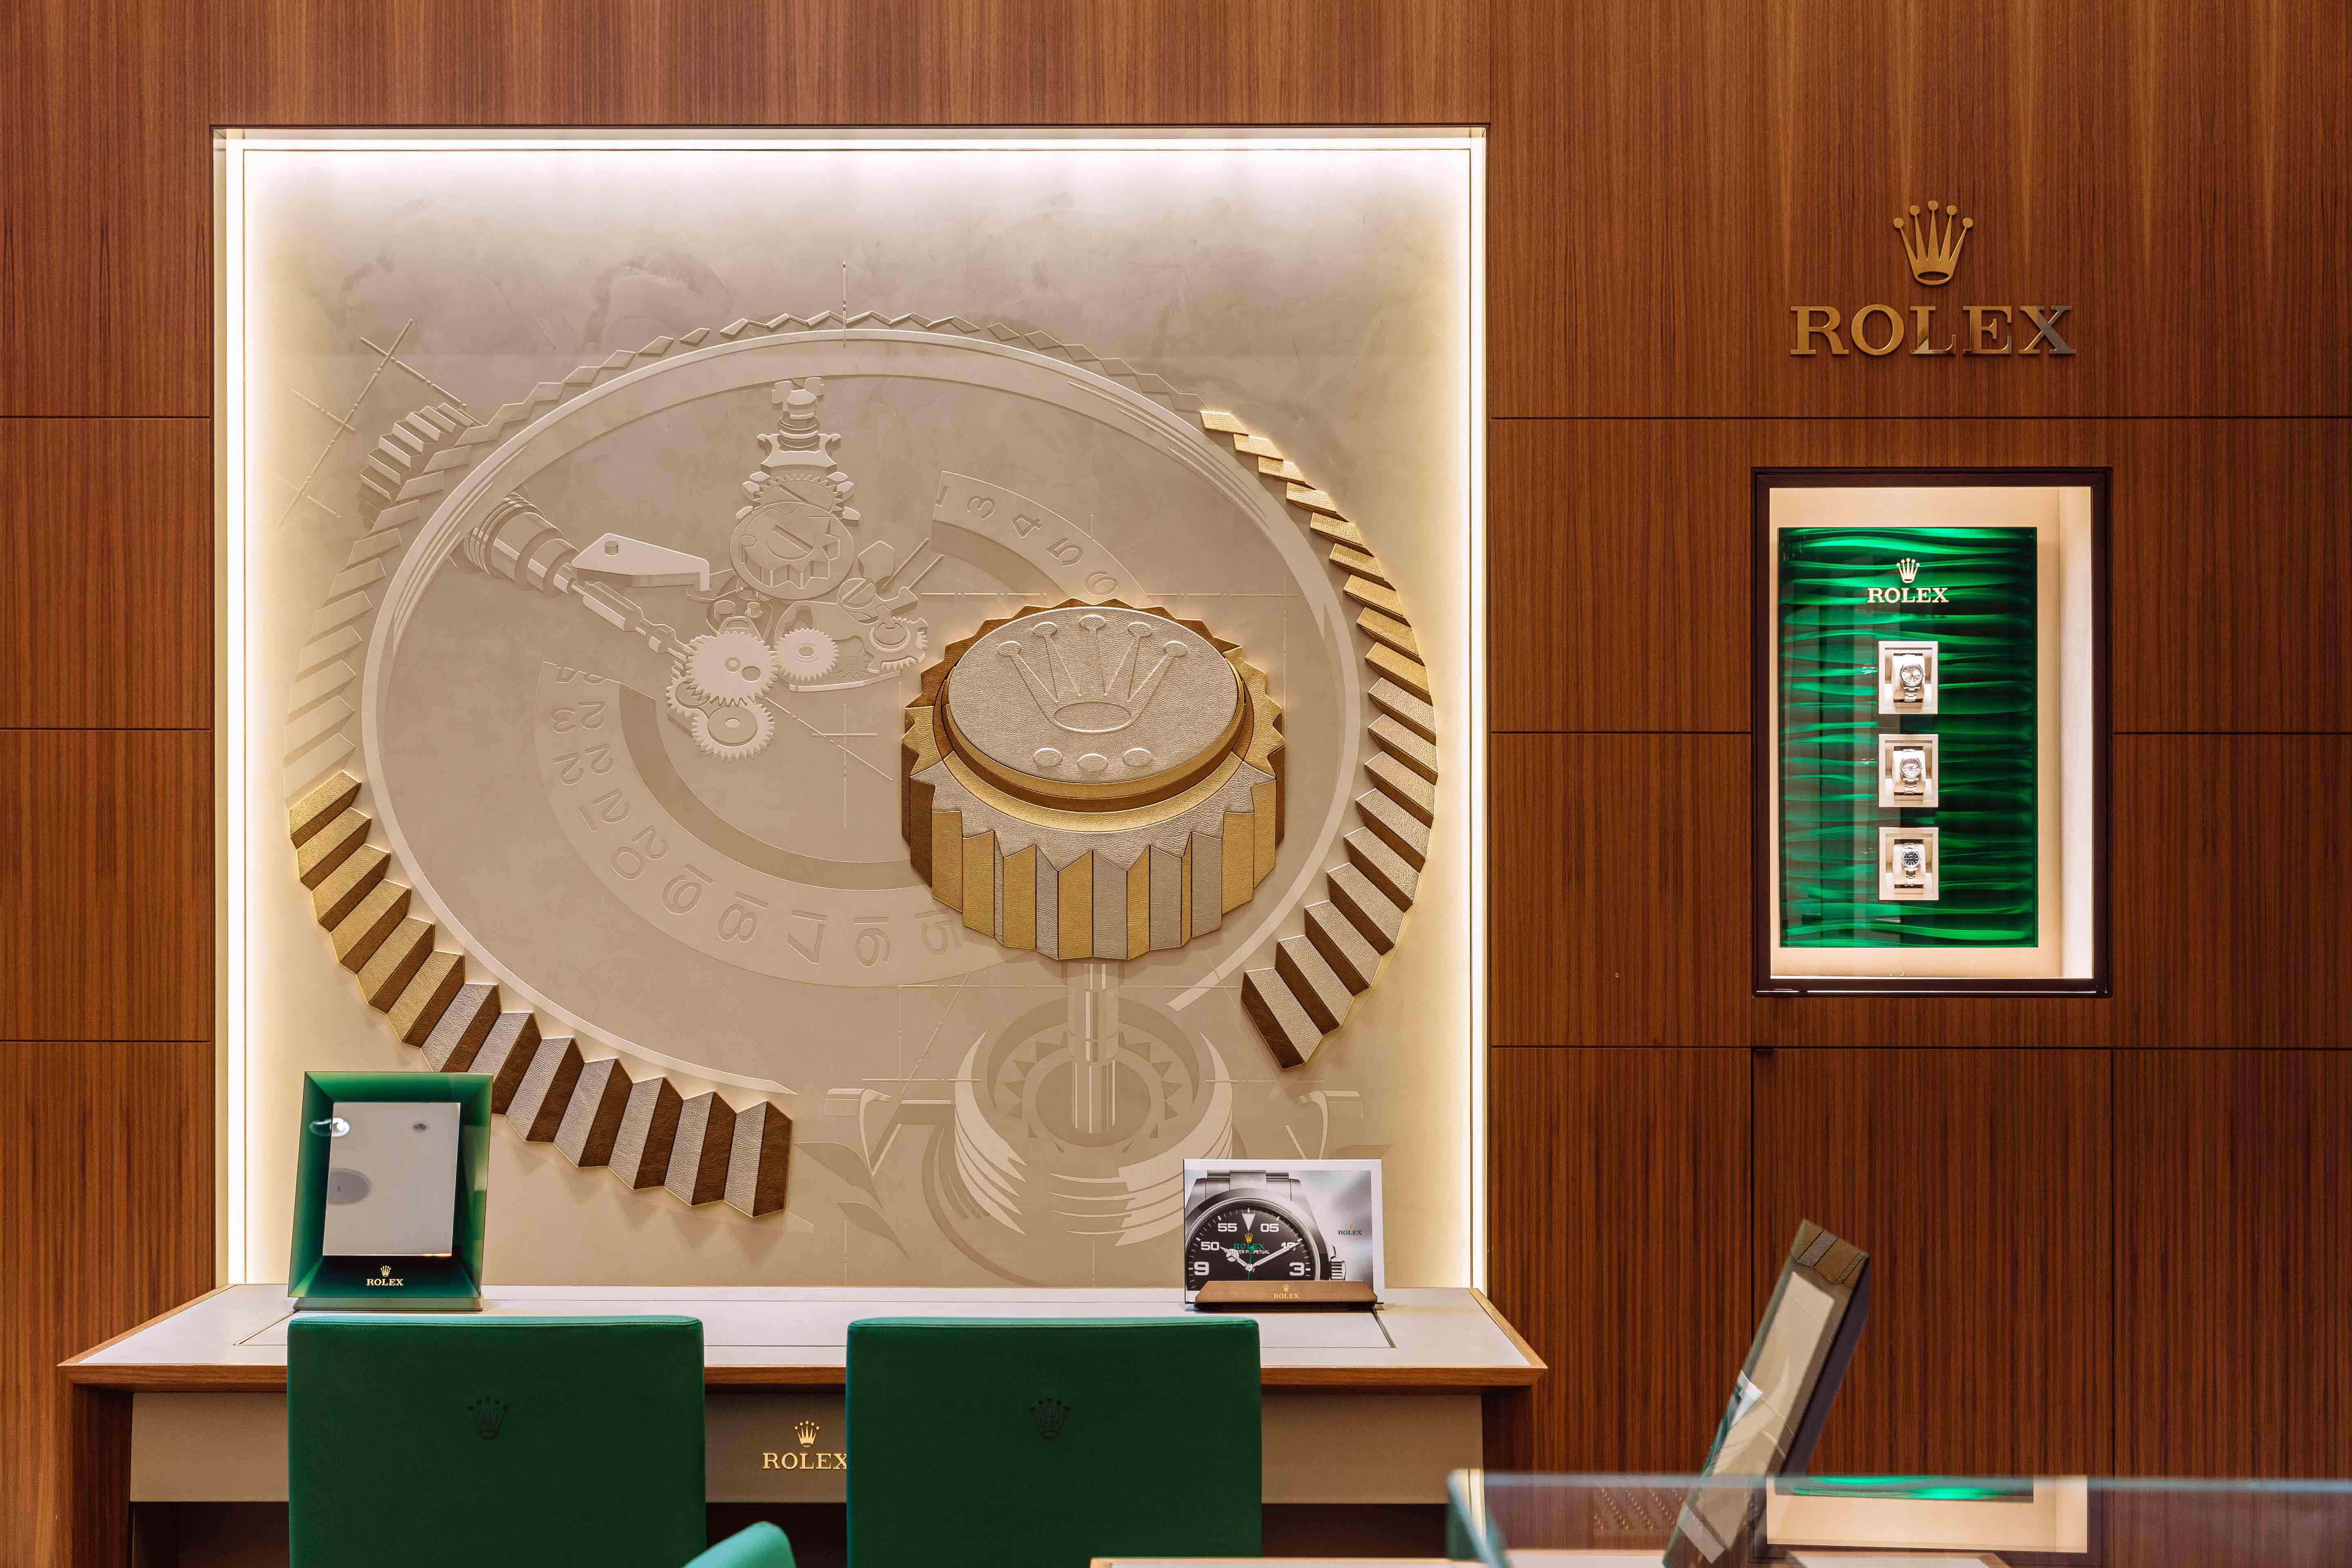 Images Rolex Boutique – Kennedy